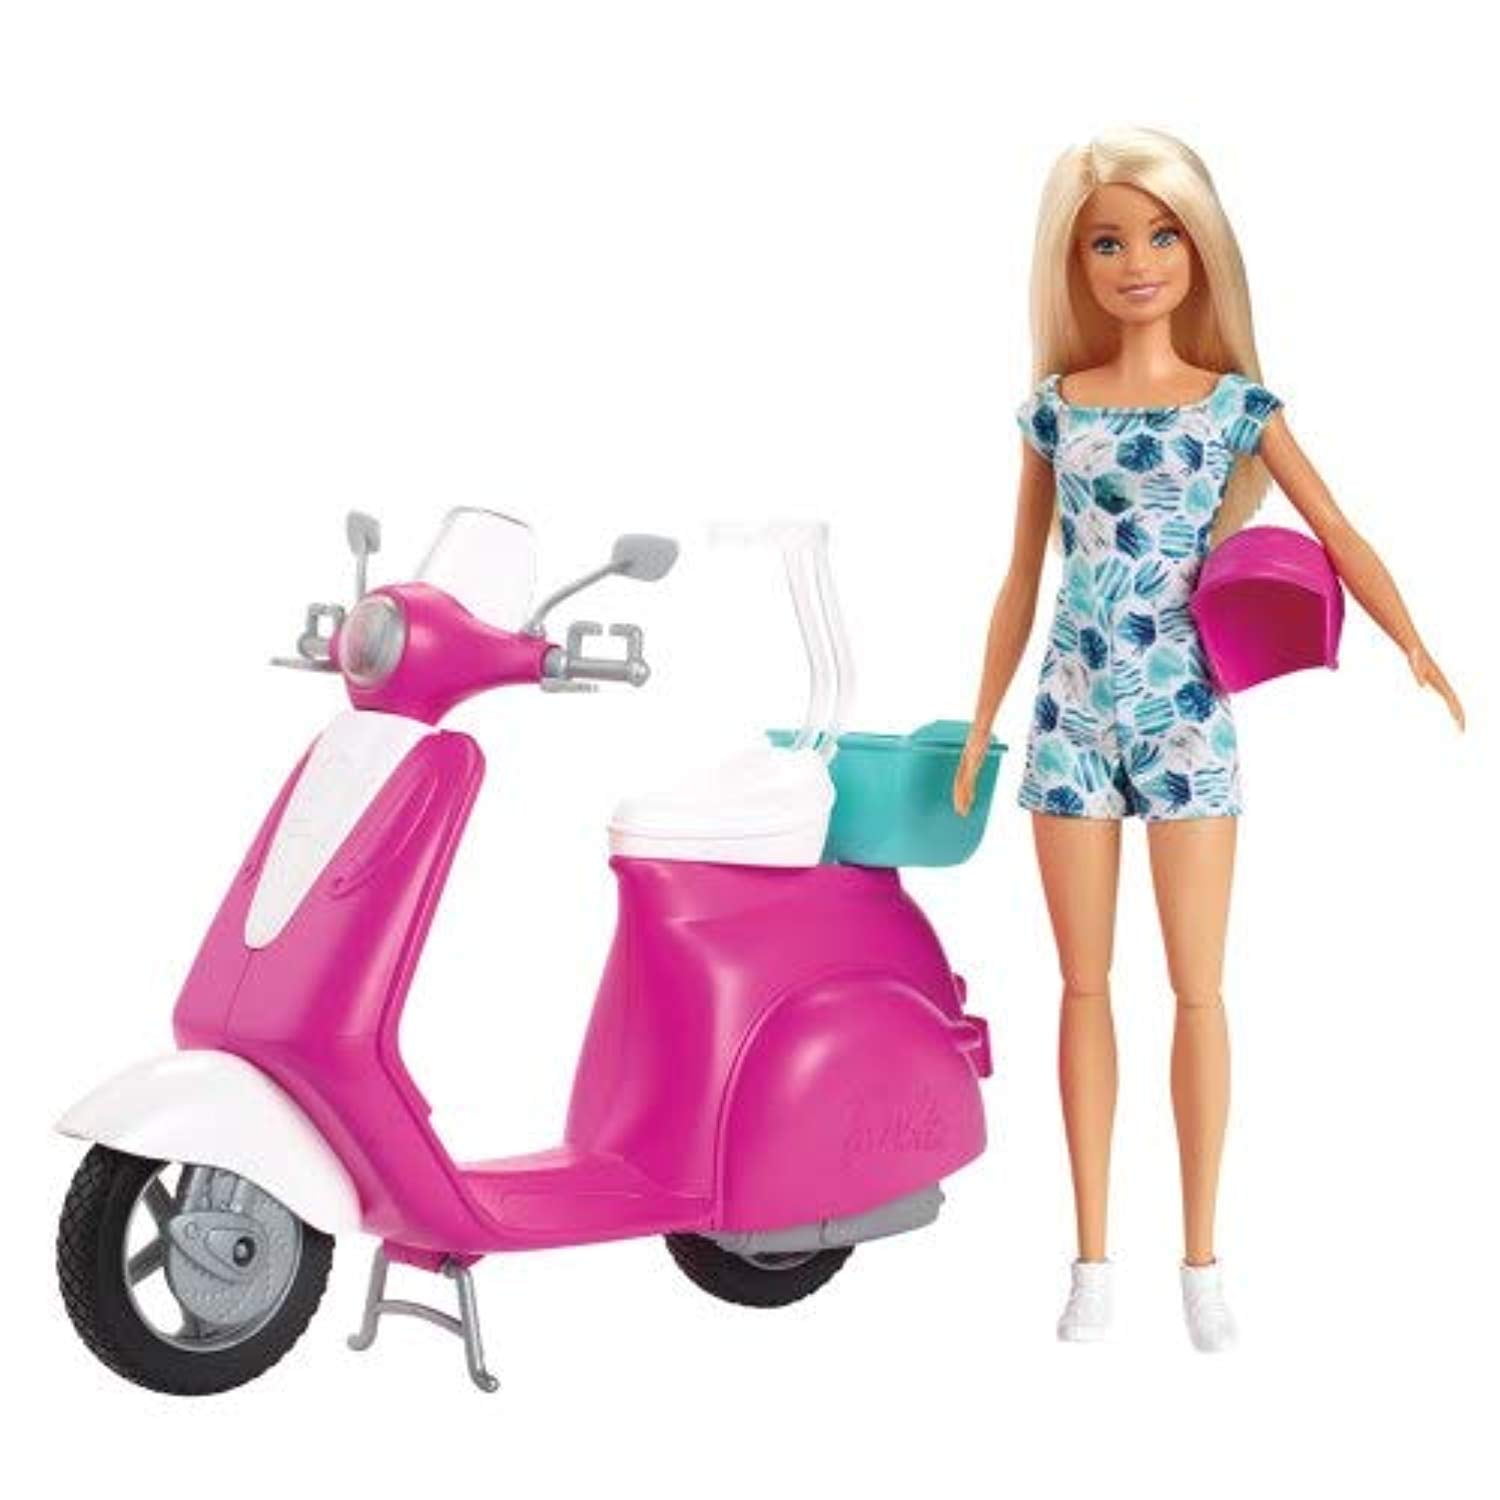 Maryanne Jones elevation Udveksle Barbie Doll & Scooter Playset Gbk85 - Walmart.com